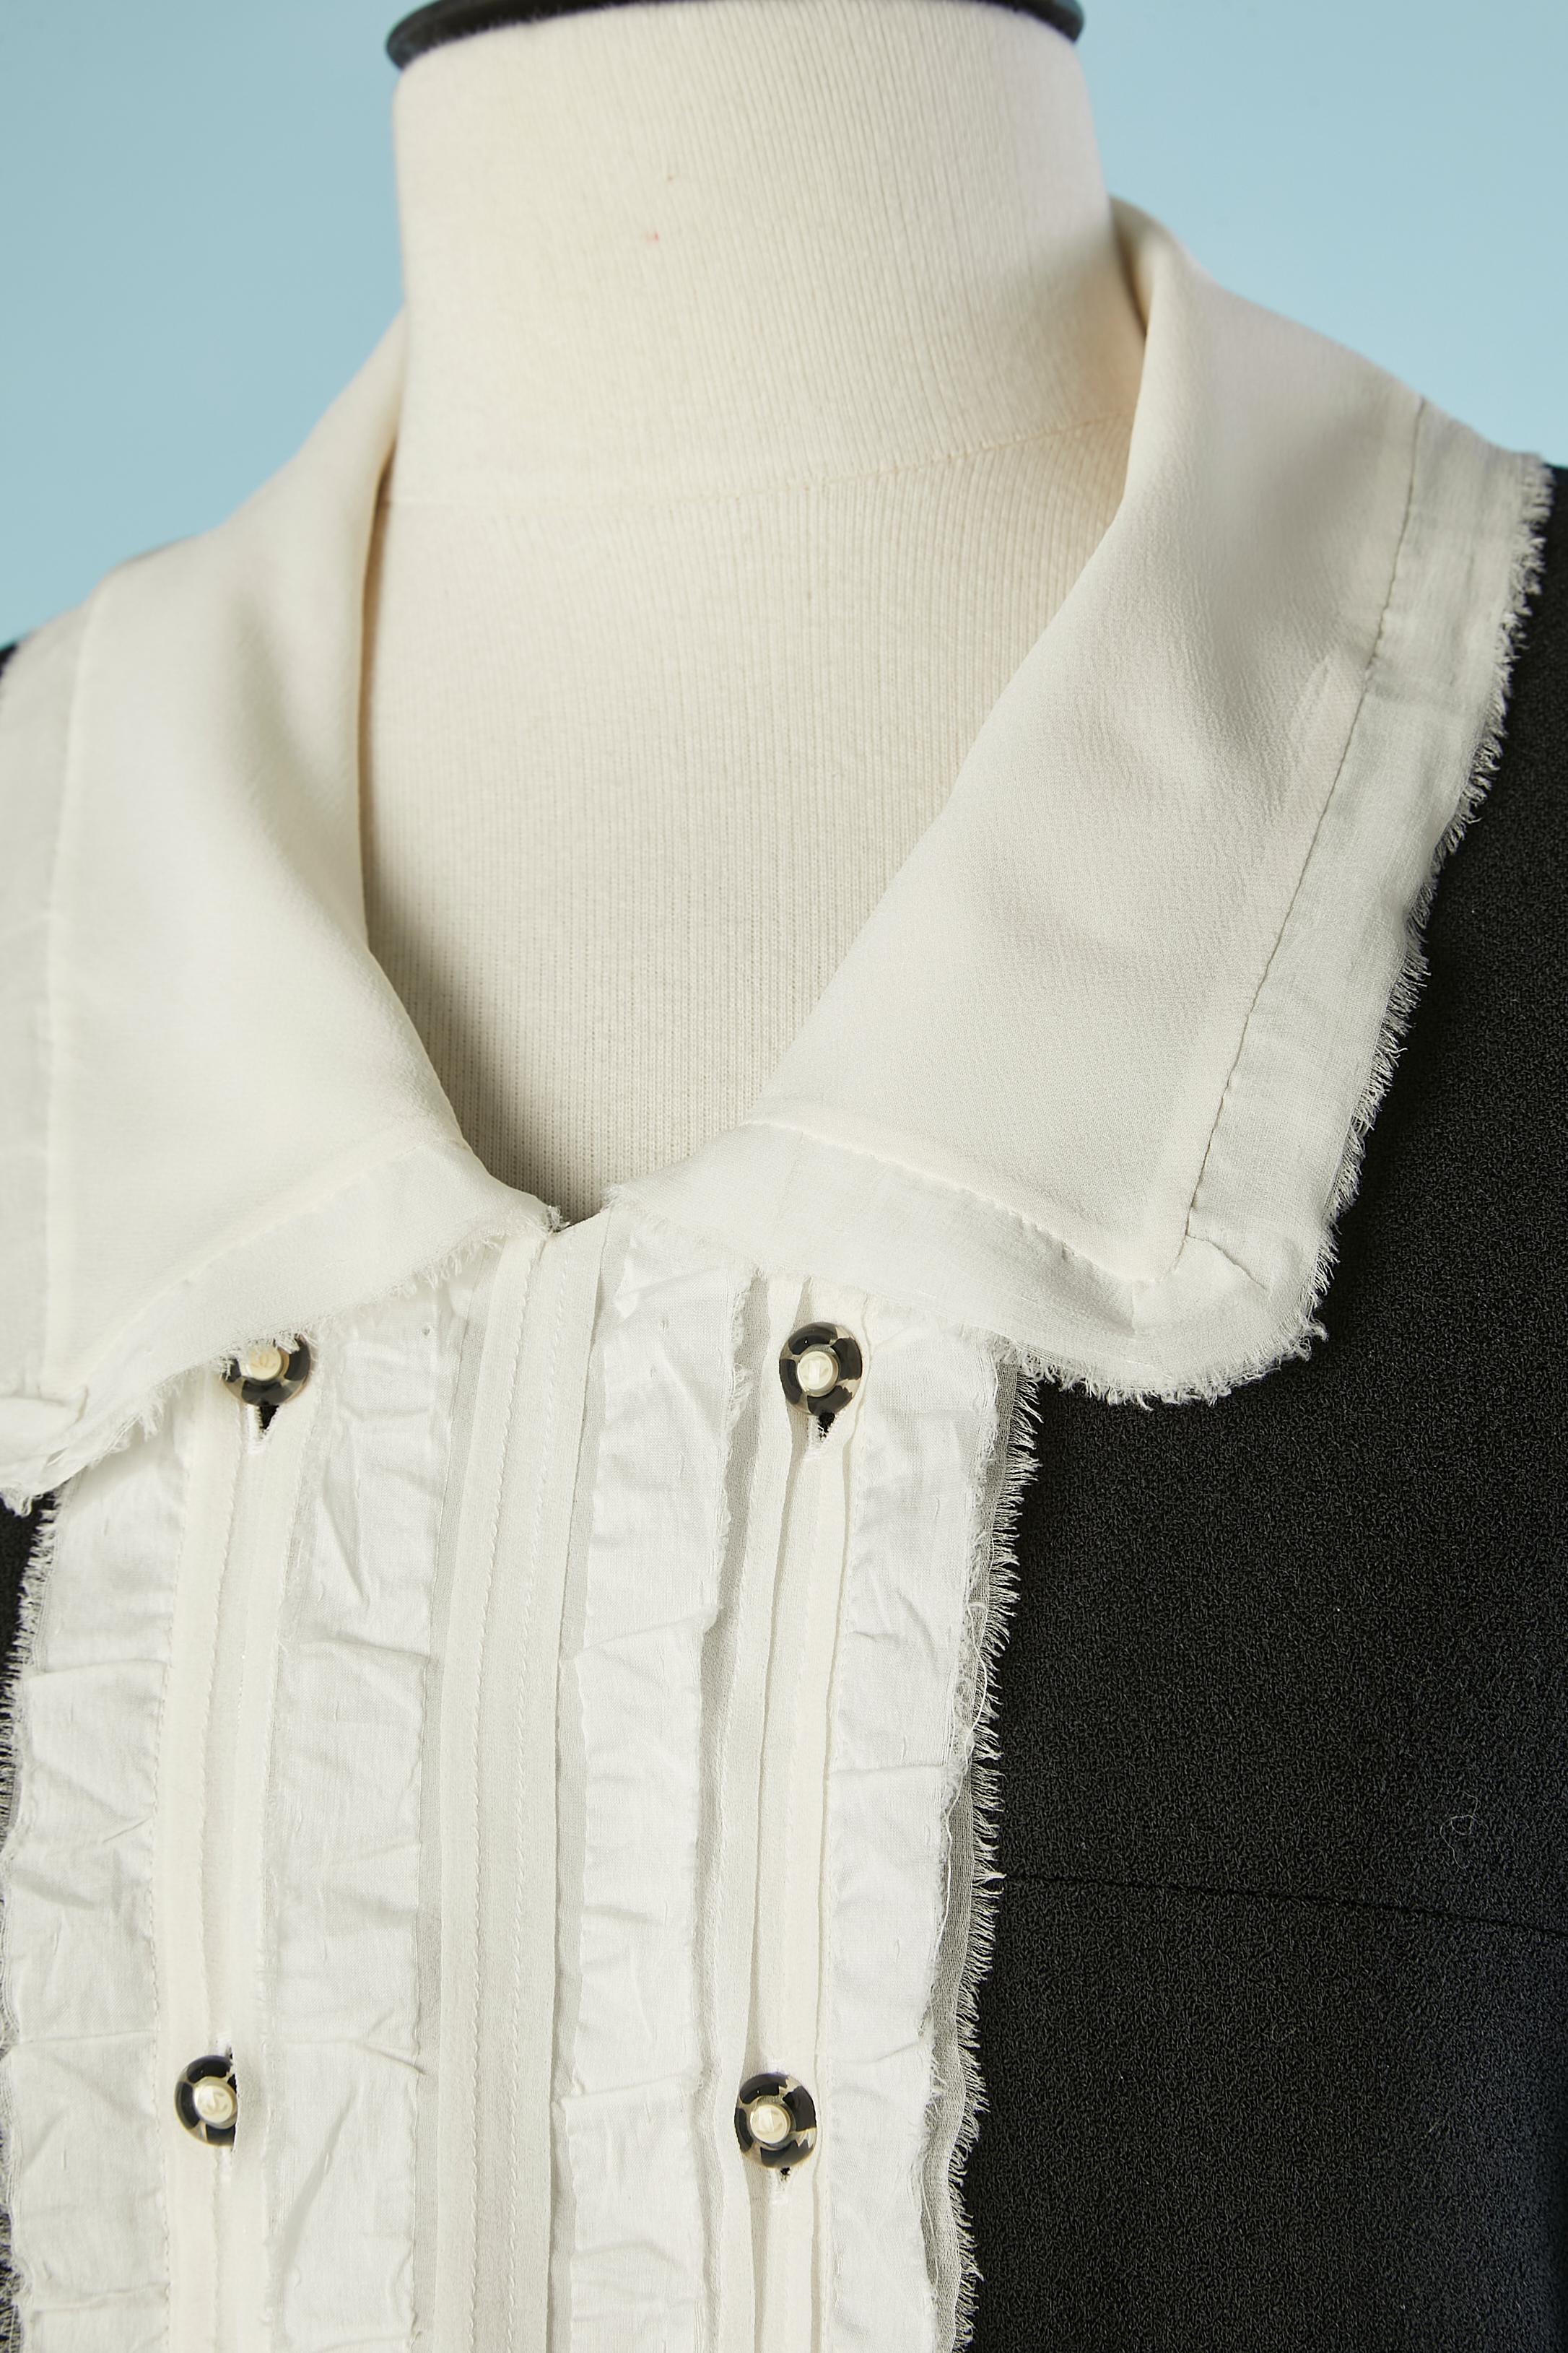 Black crêpe double-breasted jacket with silk chiffon breastplate.
Main fabric composition: wool. Inset ( chiffon) 69% silk, 27% cotton, 3% rayon, 1% metal. Lining: 95% silk, 5% elastane ( jacquard branded 